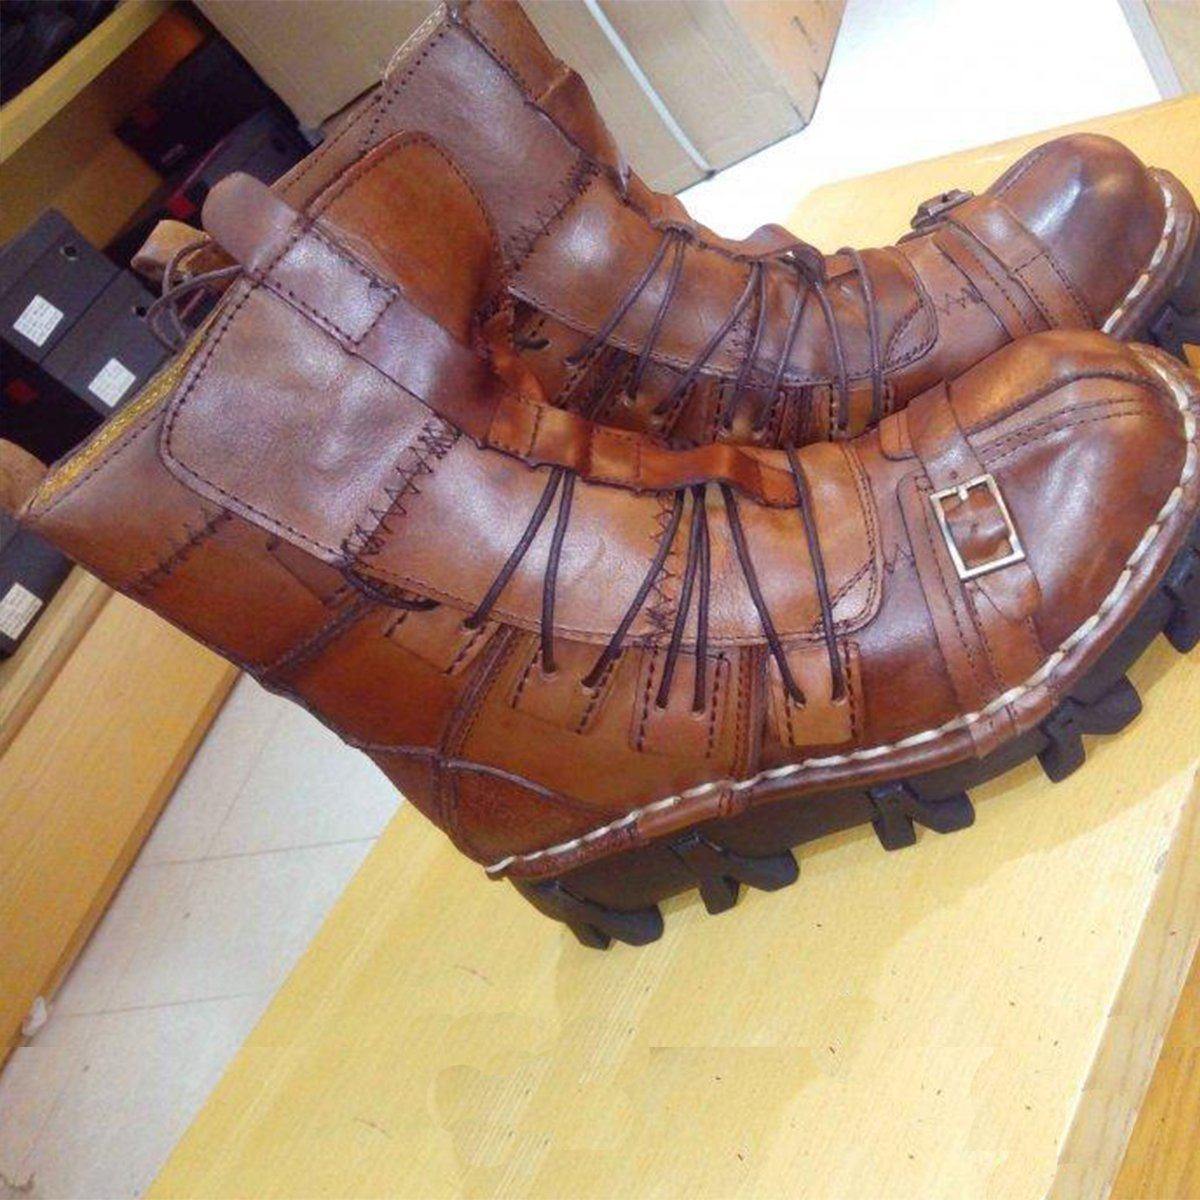 Badass Handmade Leather Boots, Size US 7-13.5, Brown, Black - American Legend Rider